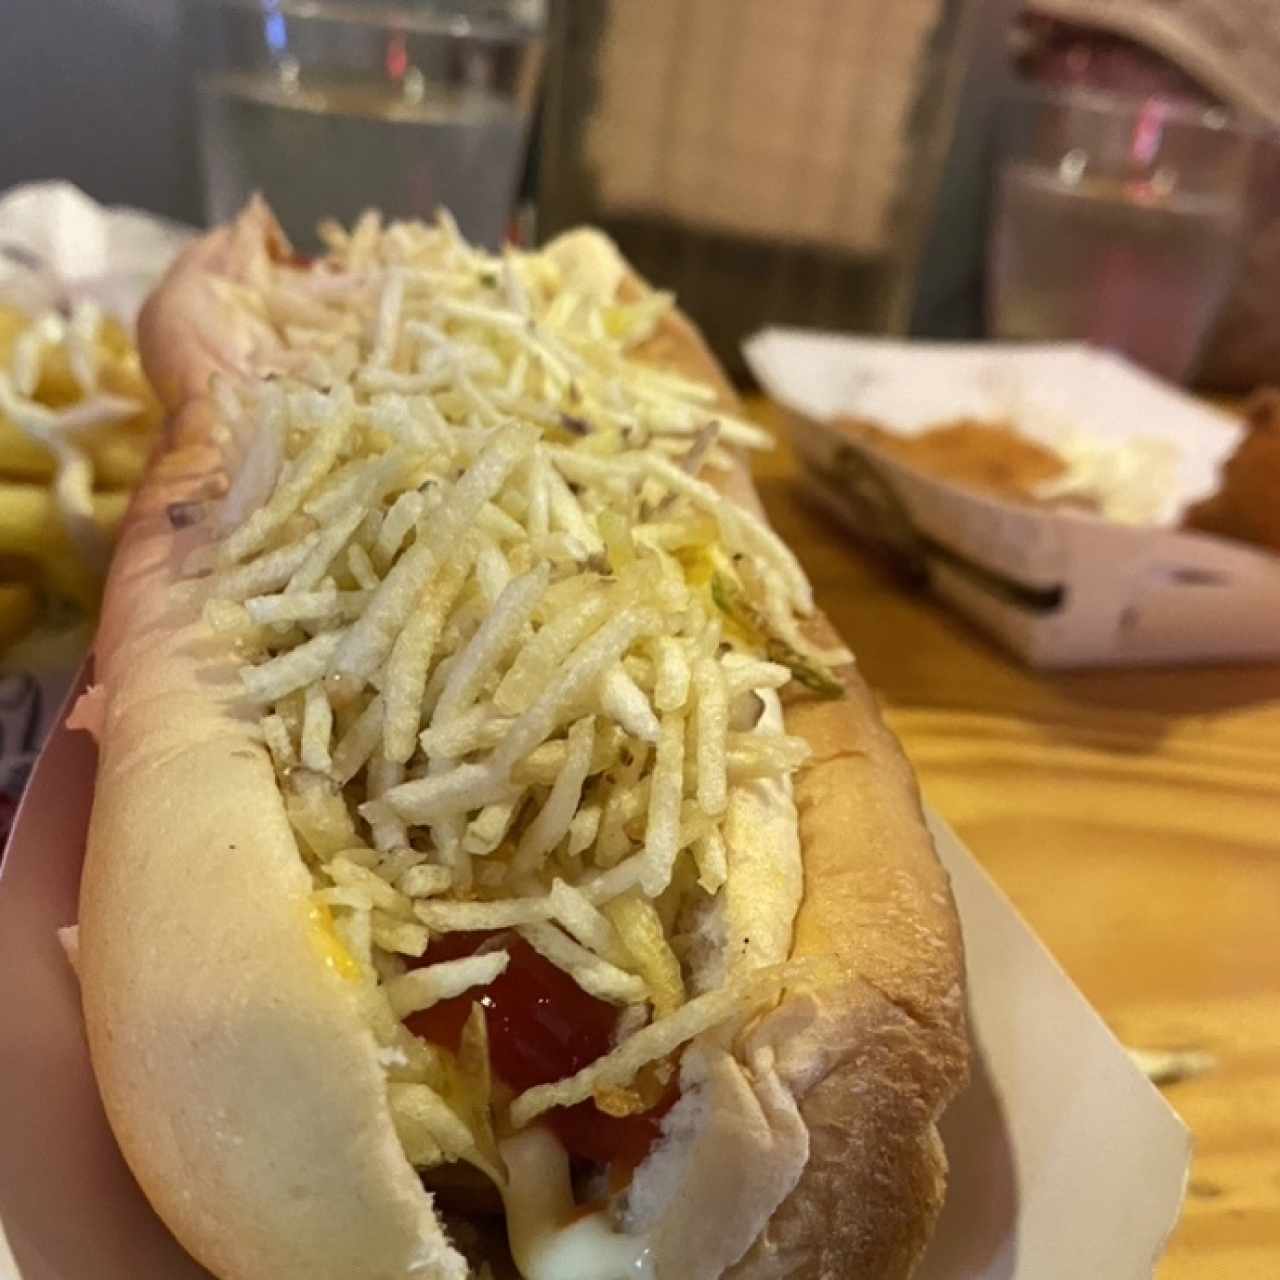 Hot Dog - Classic Dog